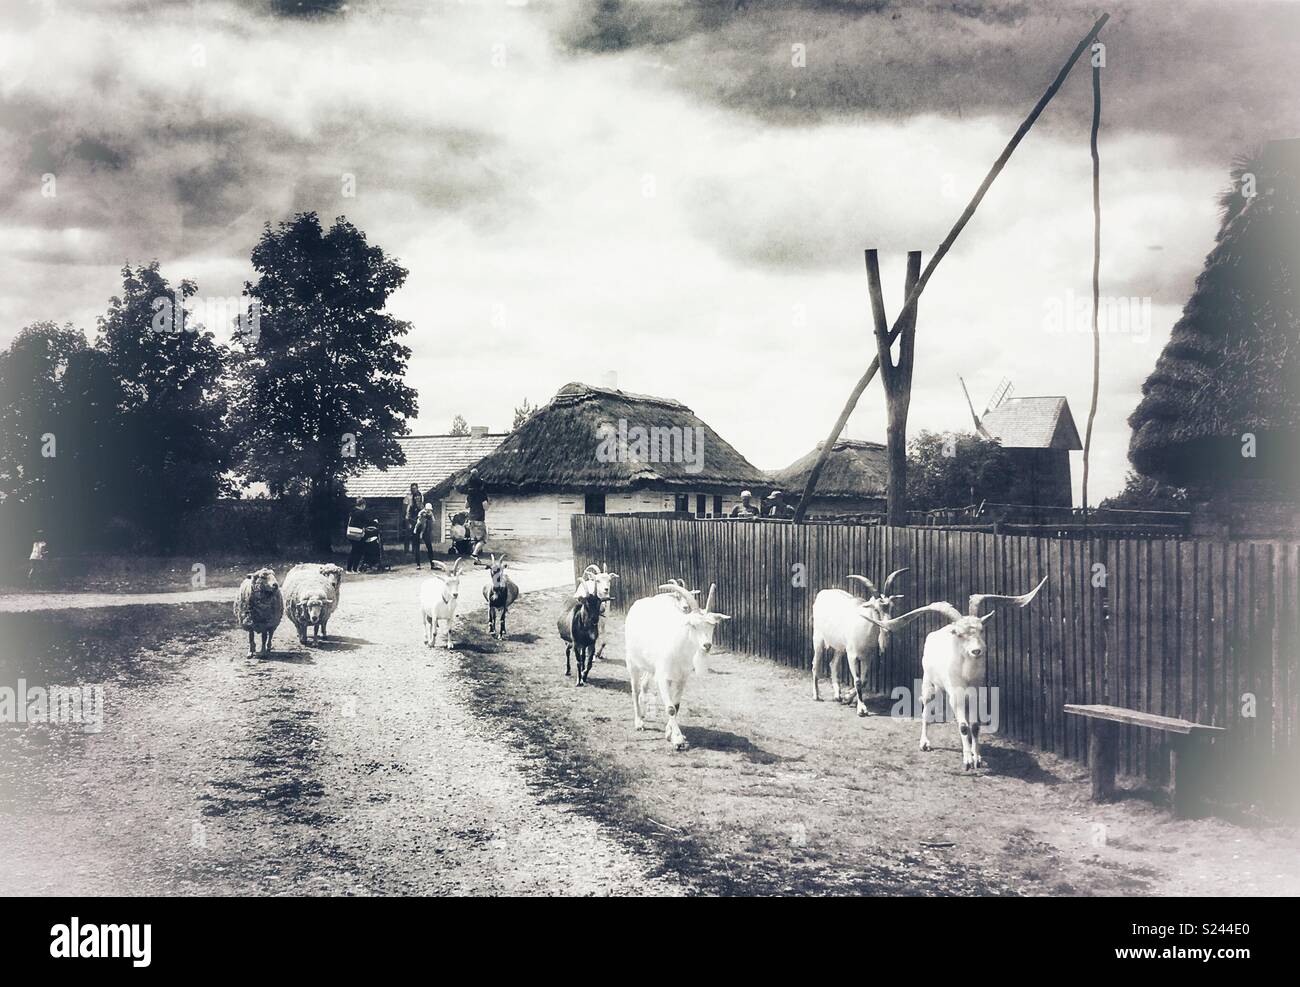 Walking goats in Ethnographic Park, Tokarnia, Poland Stock Photo